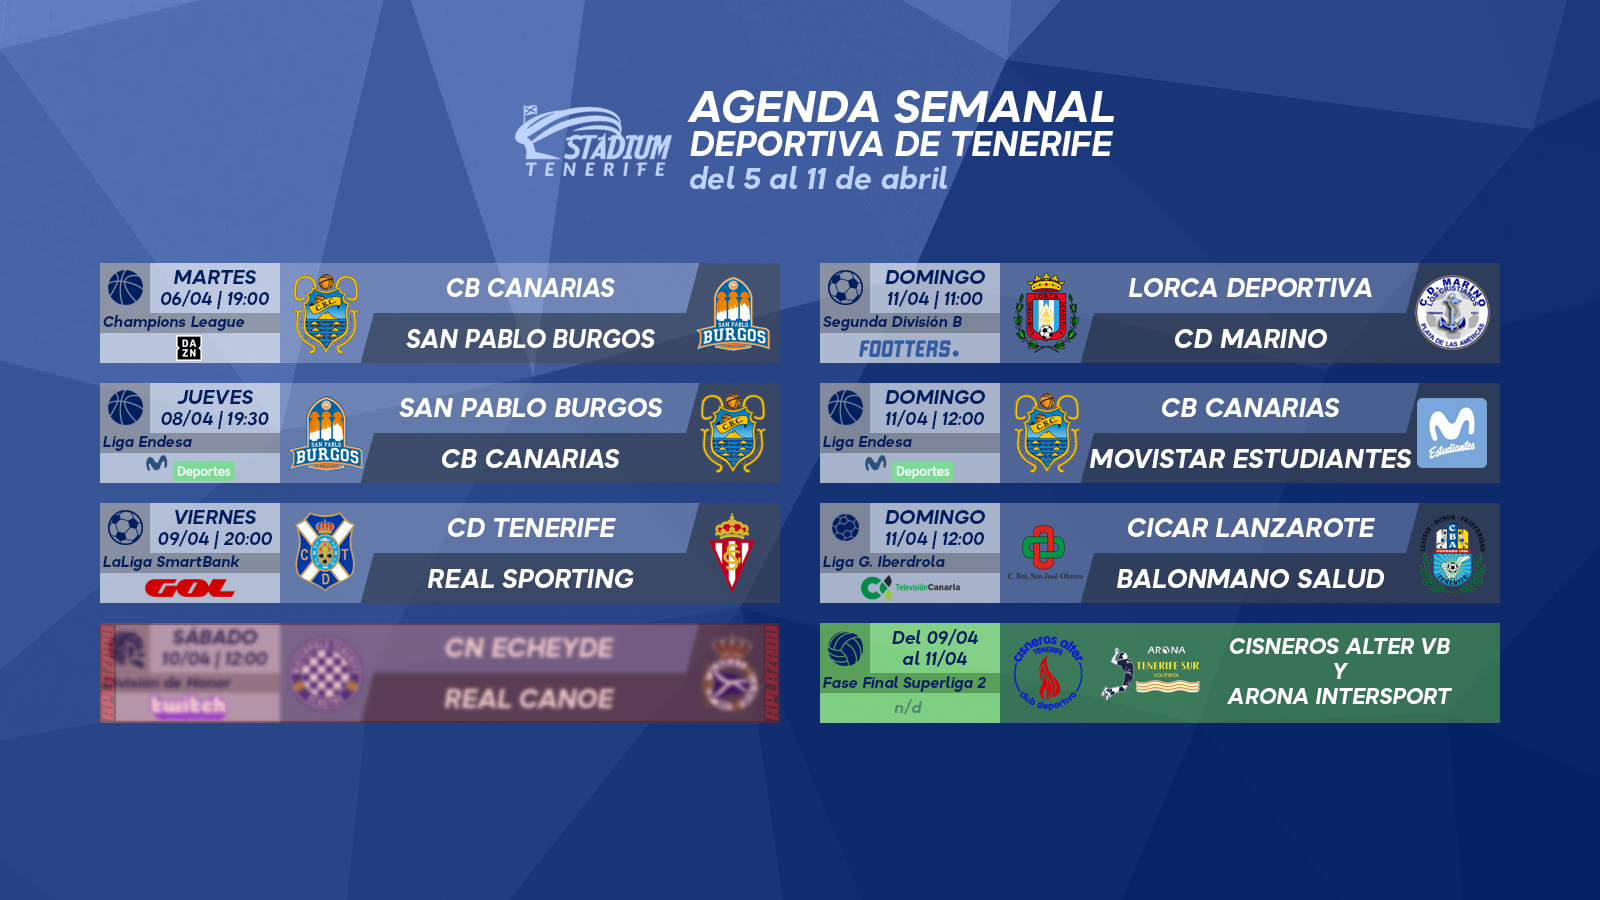 Agenda Semanal Deportiva de Tenerife (5 al 11 de abril)